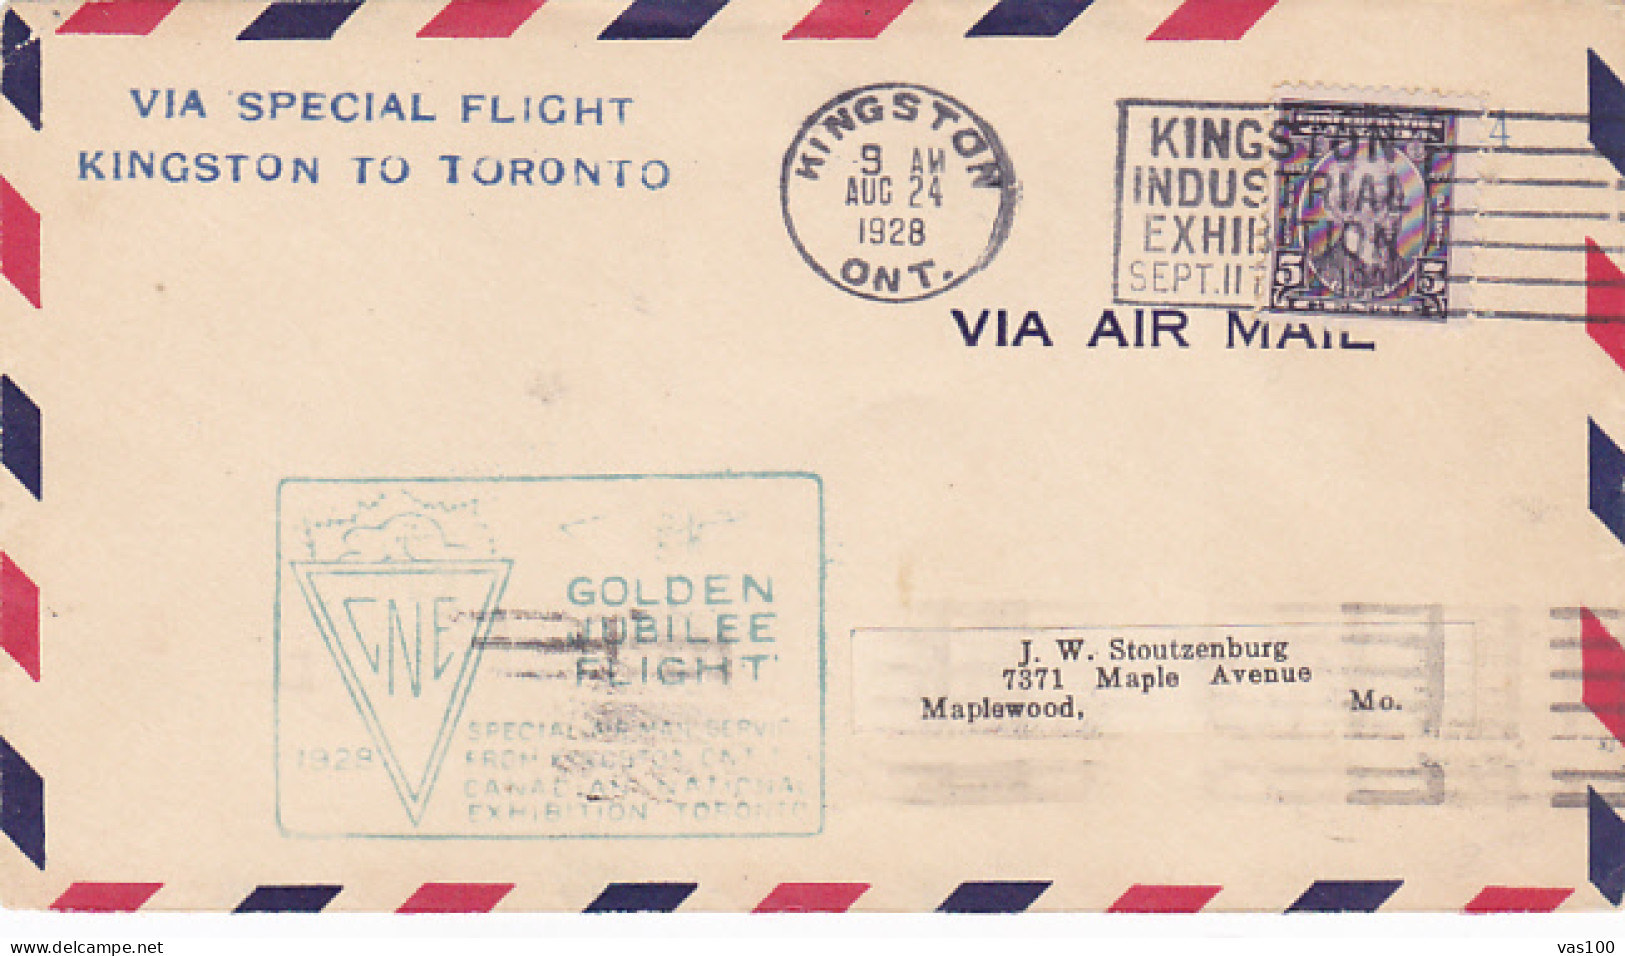 CNE GOLDEN JUBILEE FLIGHT, KINGSTON INDUSTRIAL EXHIBITION POSTMARKS, SIR LAURIER, STAMP ON COVER, 1928, CANADA - Briefe U. Dokumente